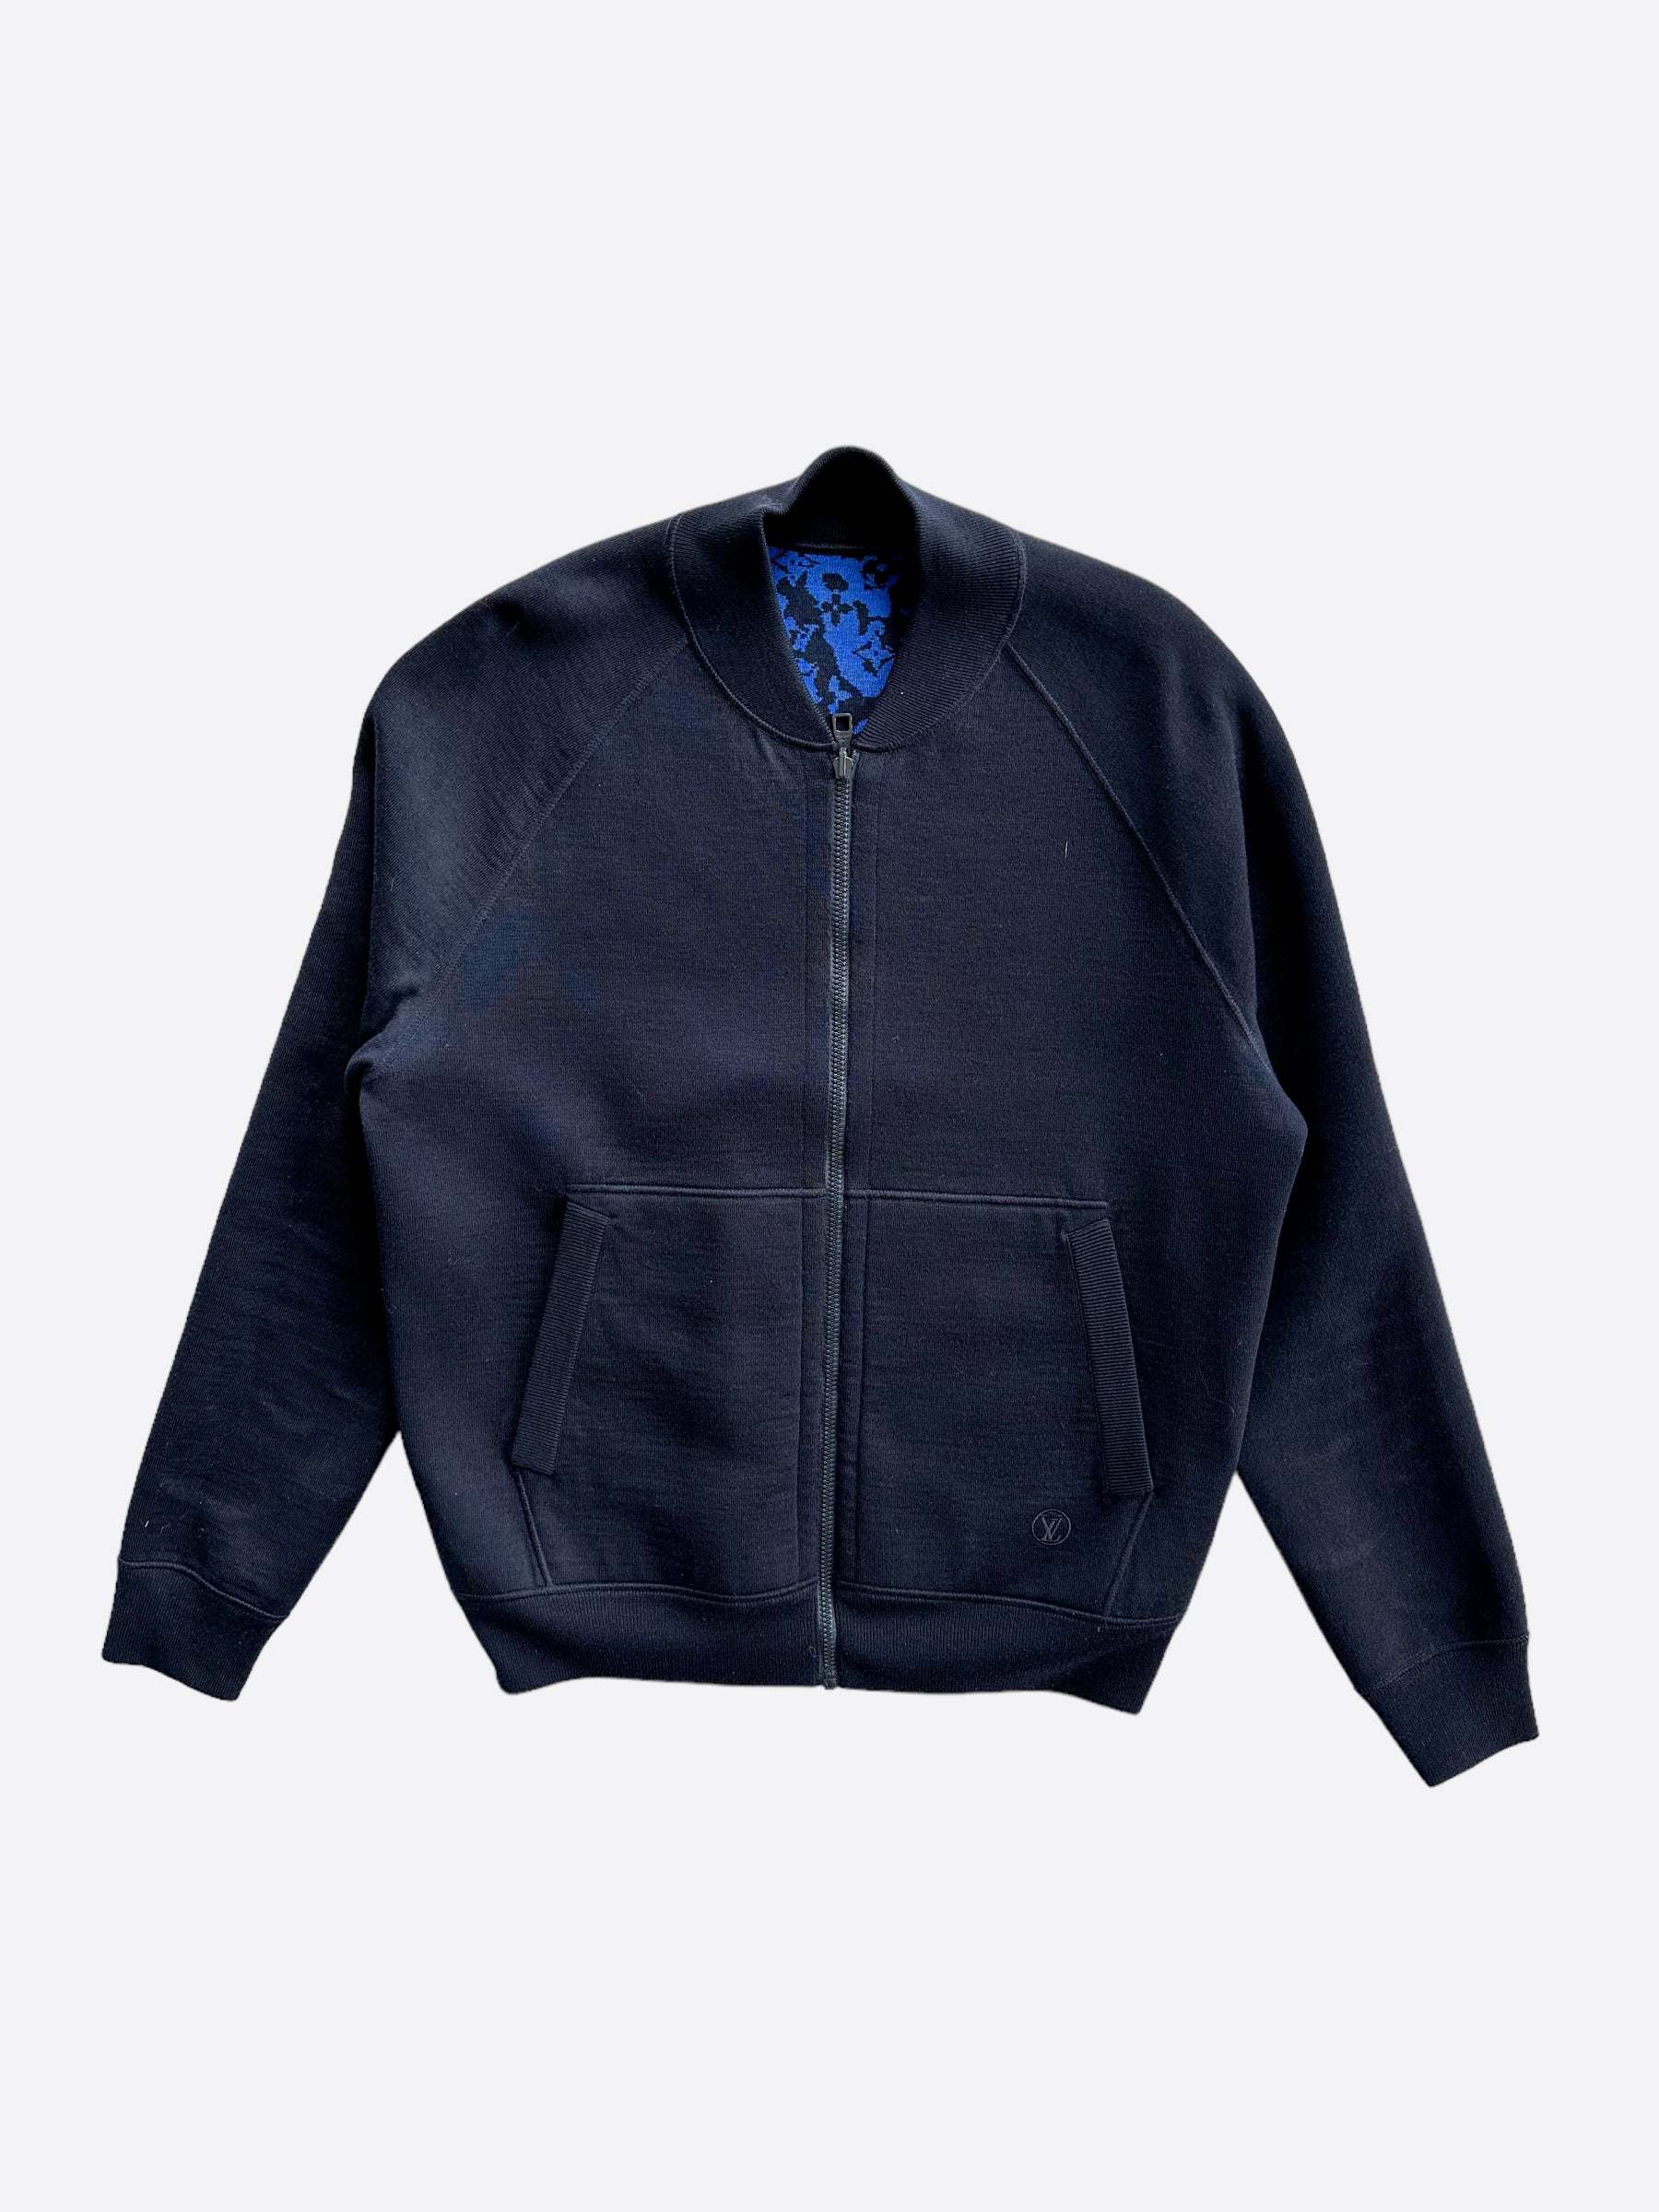 Louis Vuitton Men's Monogram Bomber Jacket